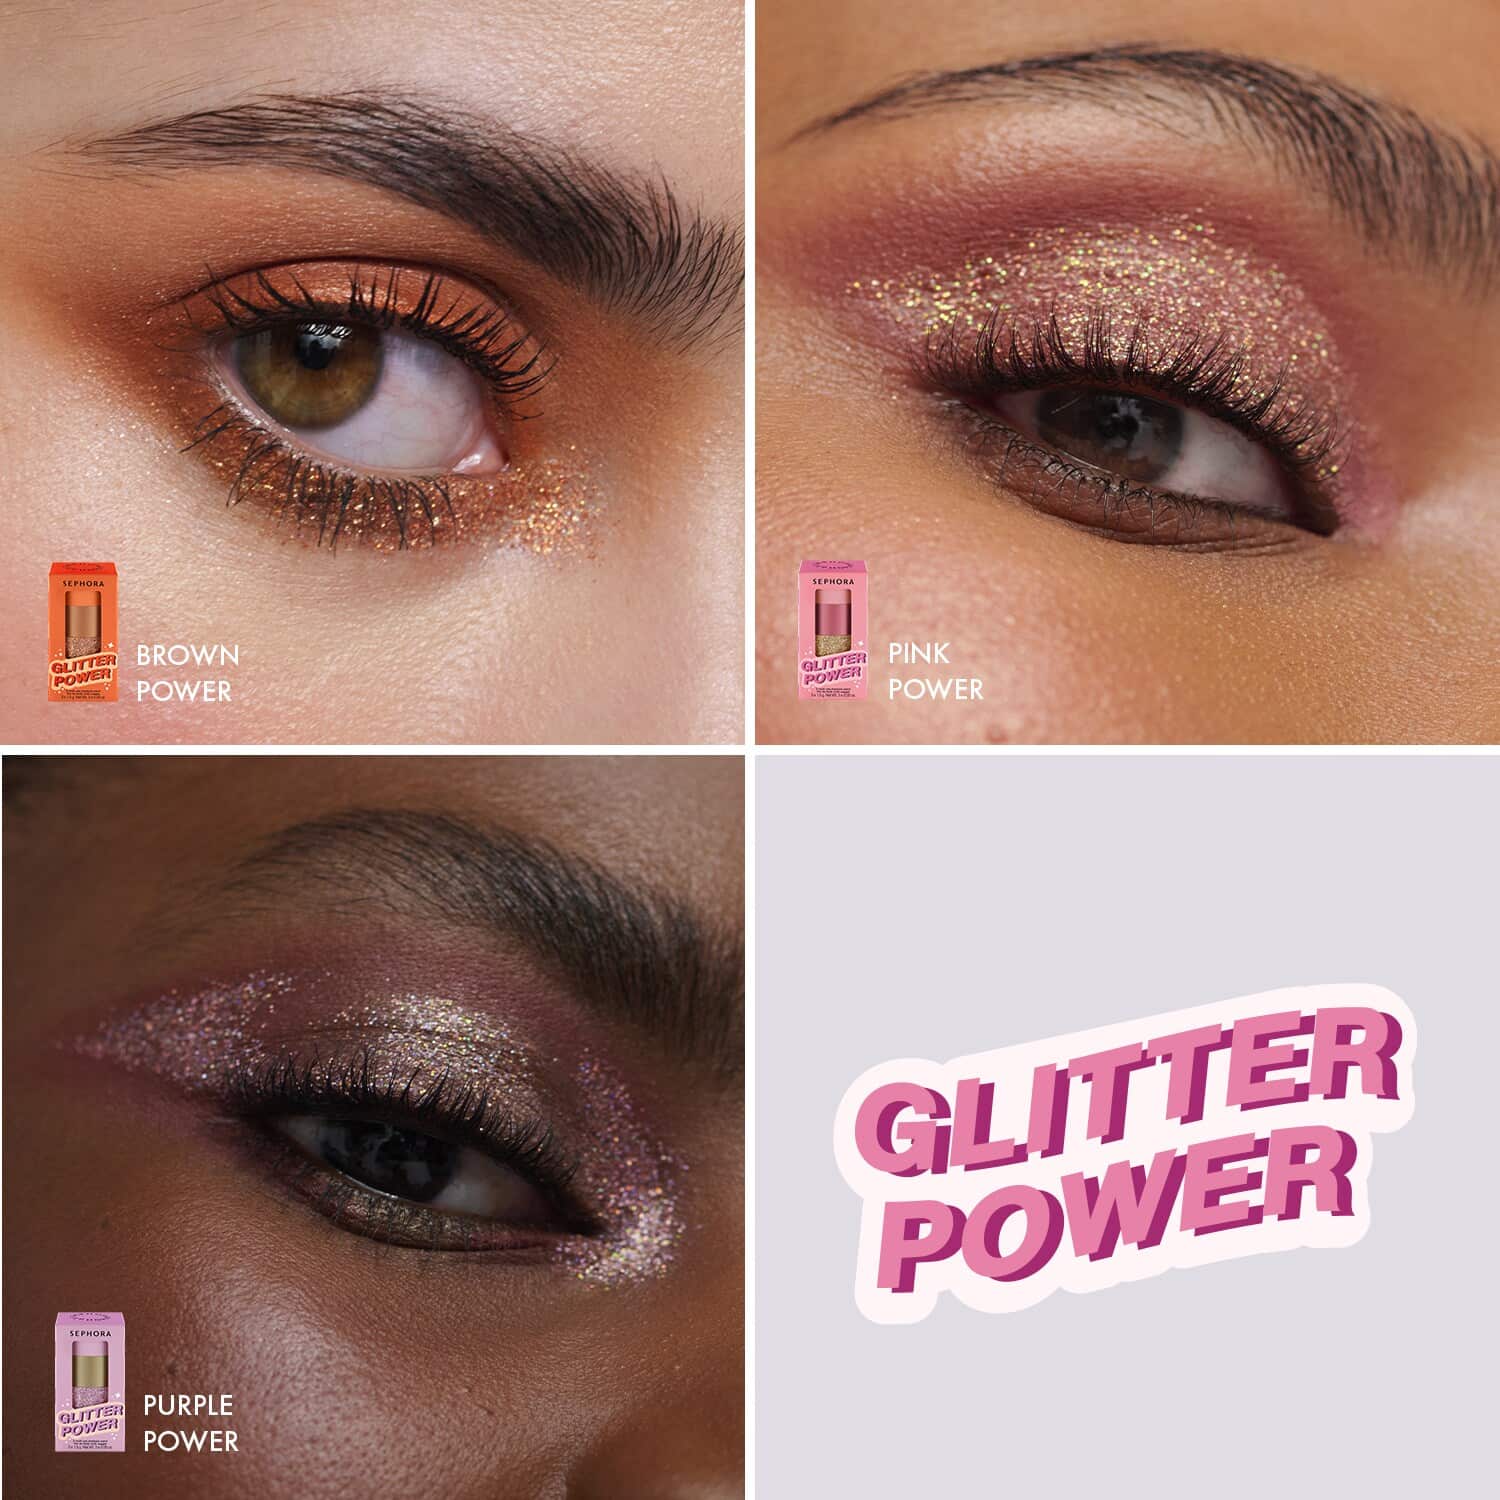 Sephora collection glitter power